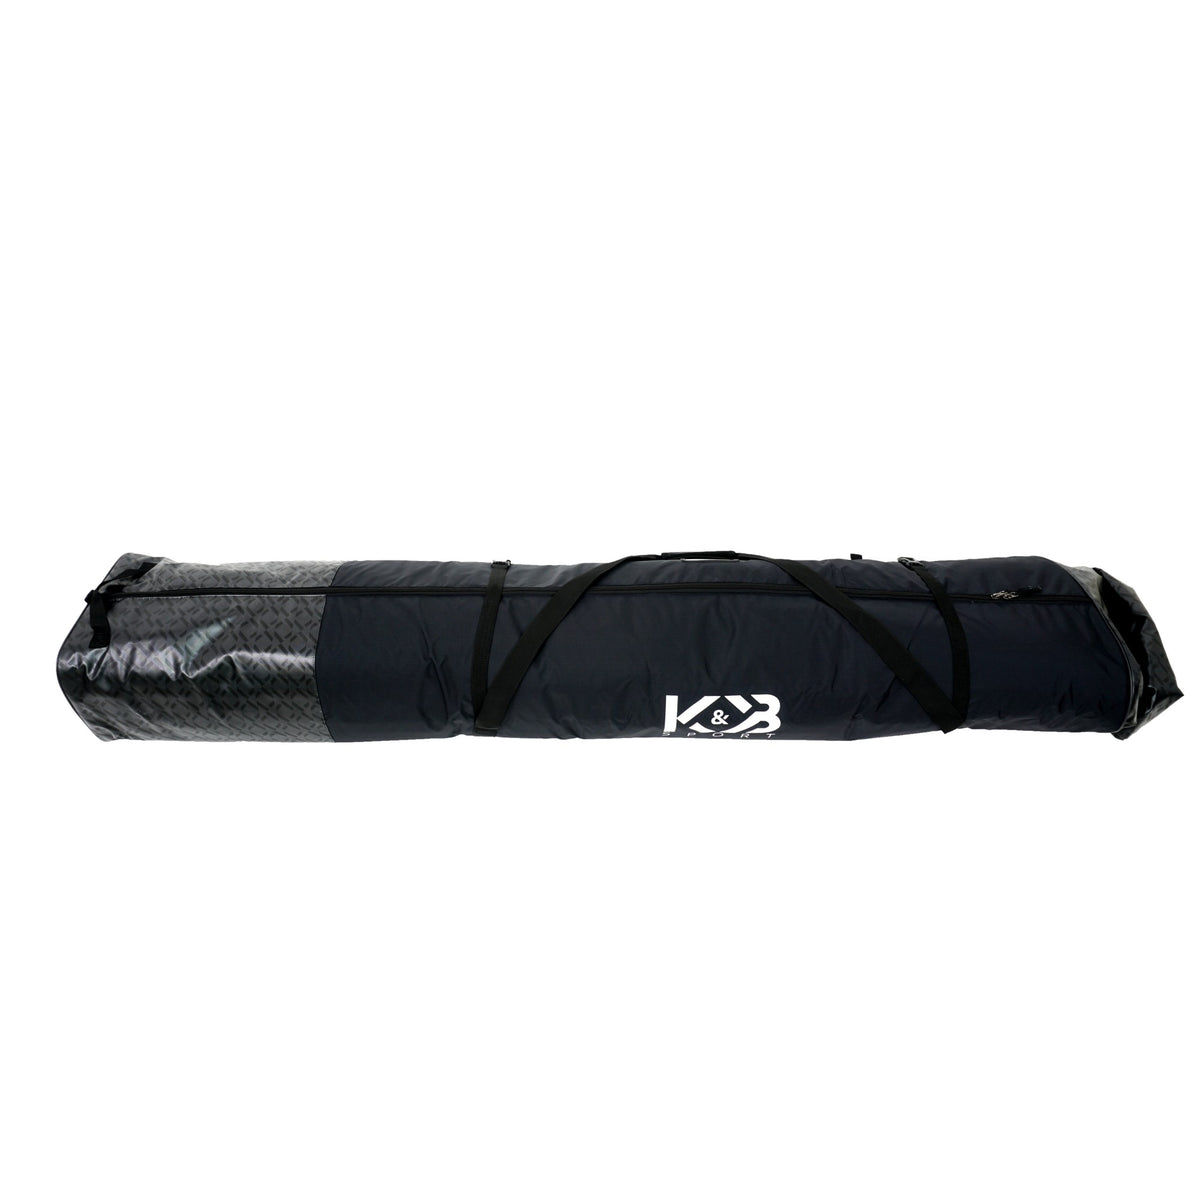 K&B Adjustable Padded Double Adult Skis Bag – Oberson